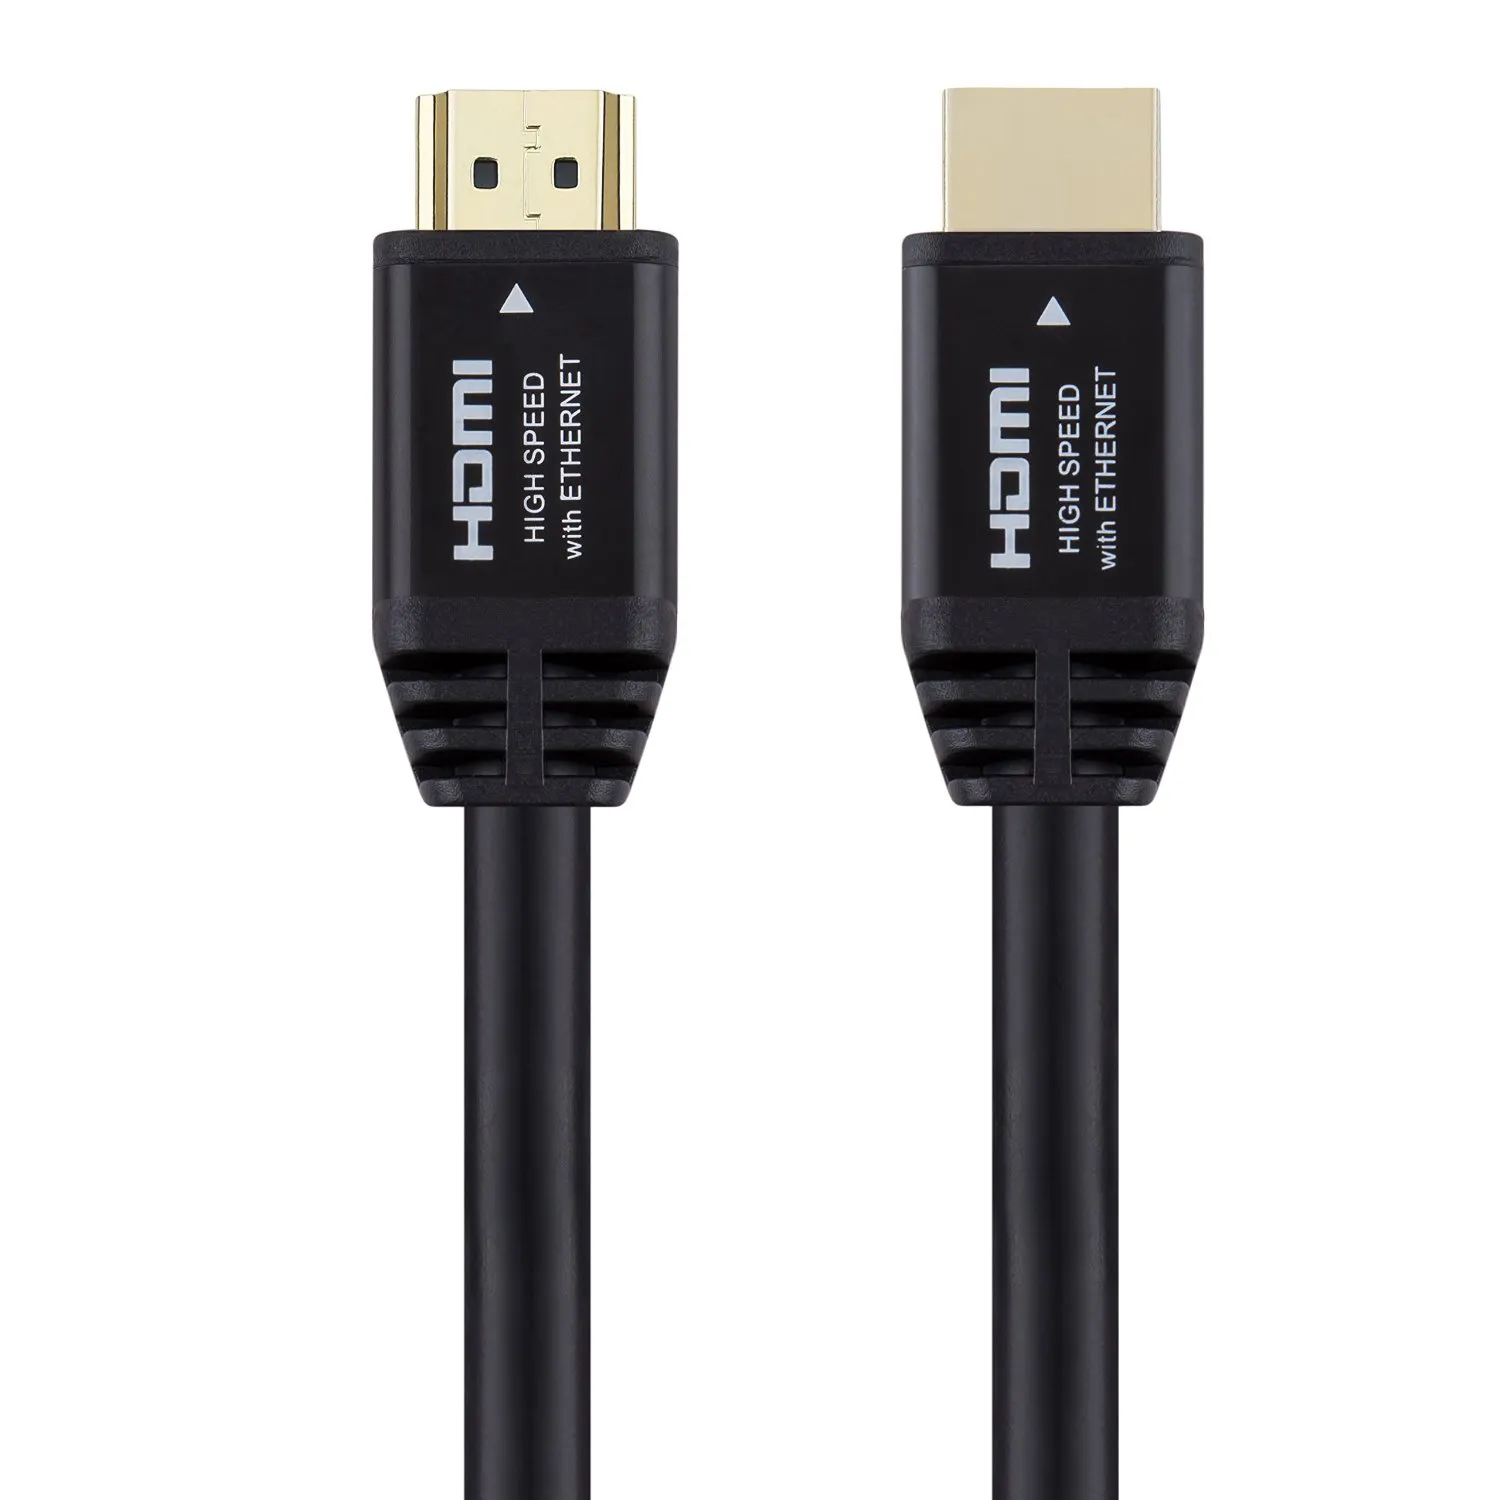 Hdmi כבל מכירה לוהטת 1m 2160p ברזולוציה גבוהה שחור 4k 60hz באופן 18 5gbps עבור hdtv Ps3/4 HDMI Kabel